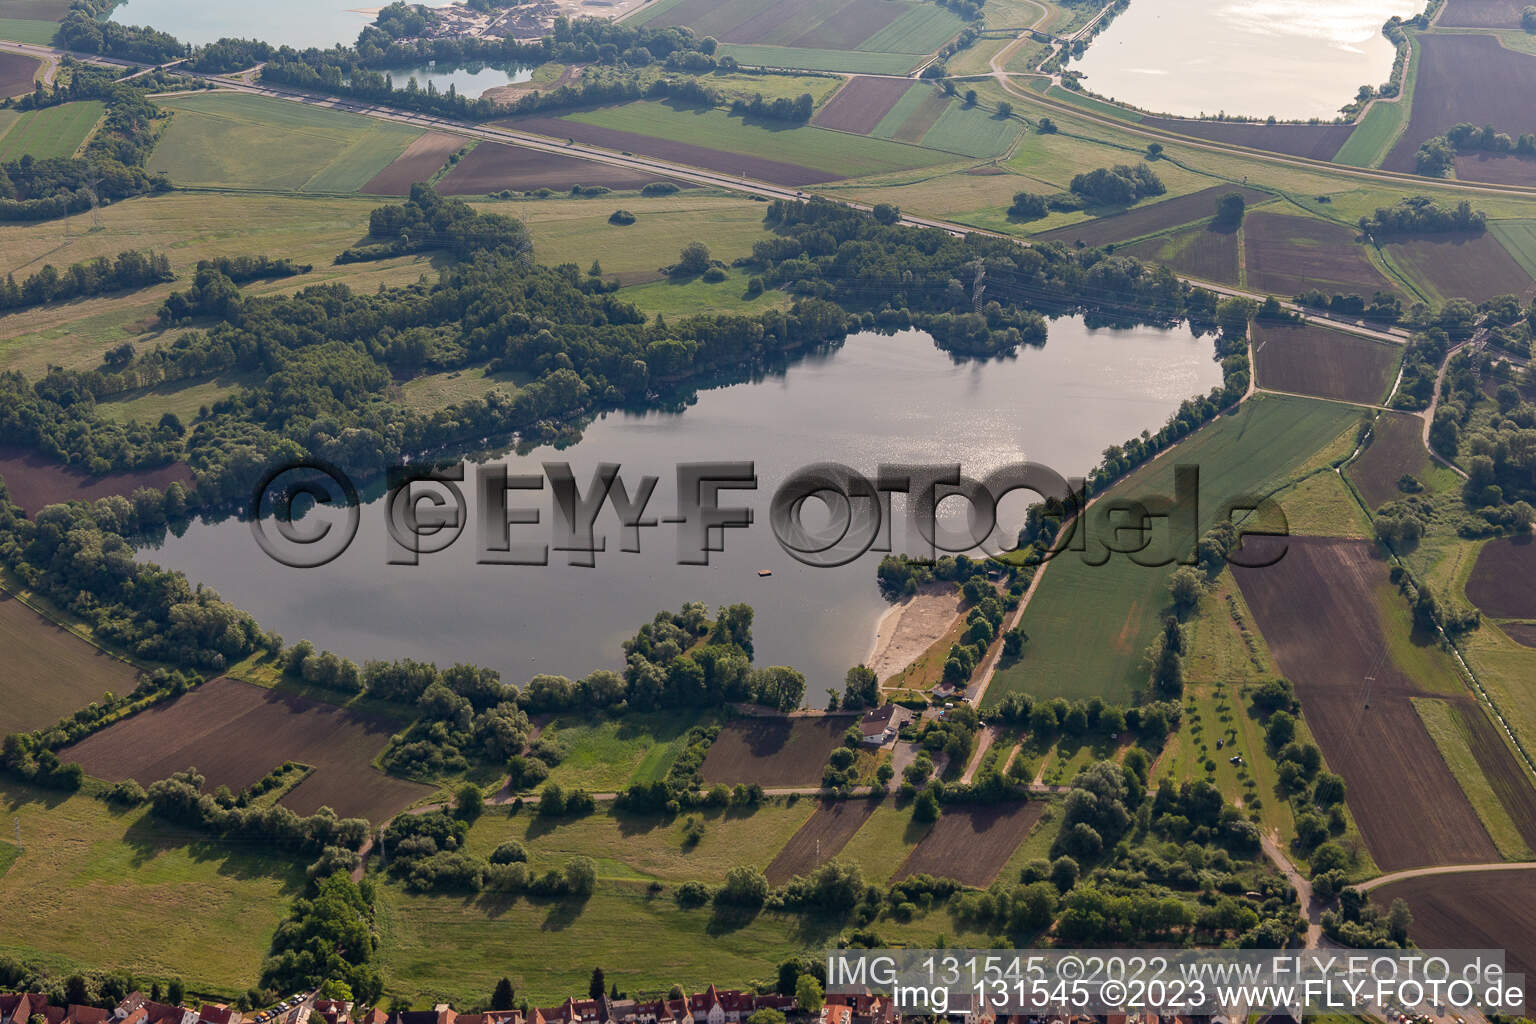 Johanneswiese quarry lake in Jockgrim in the state Rhineland-Palatinate, Germany